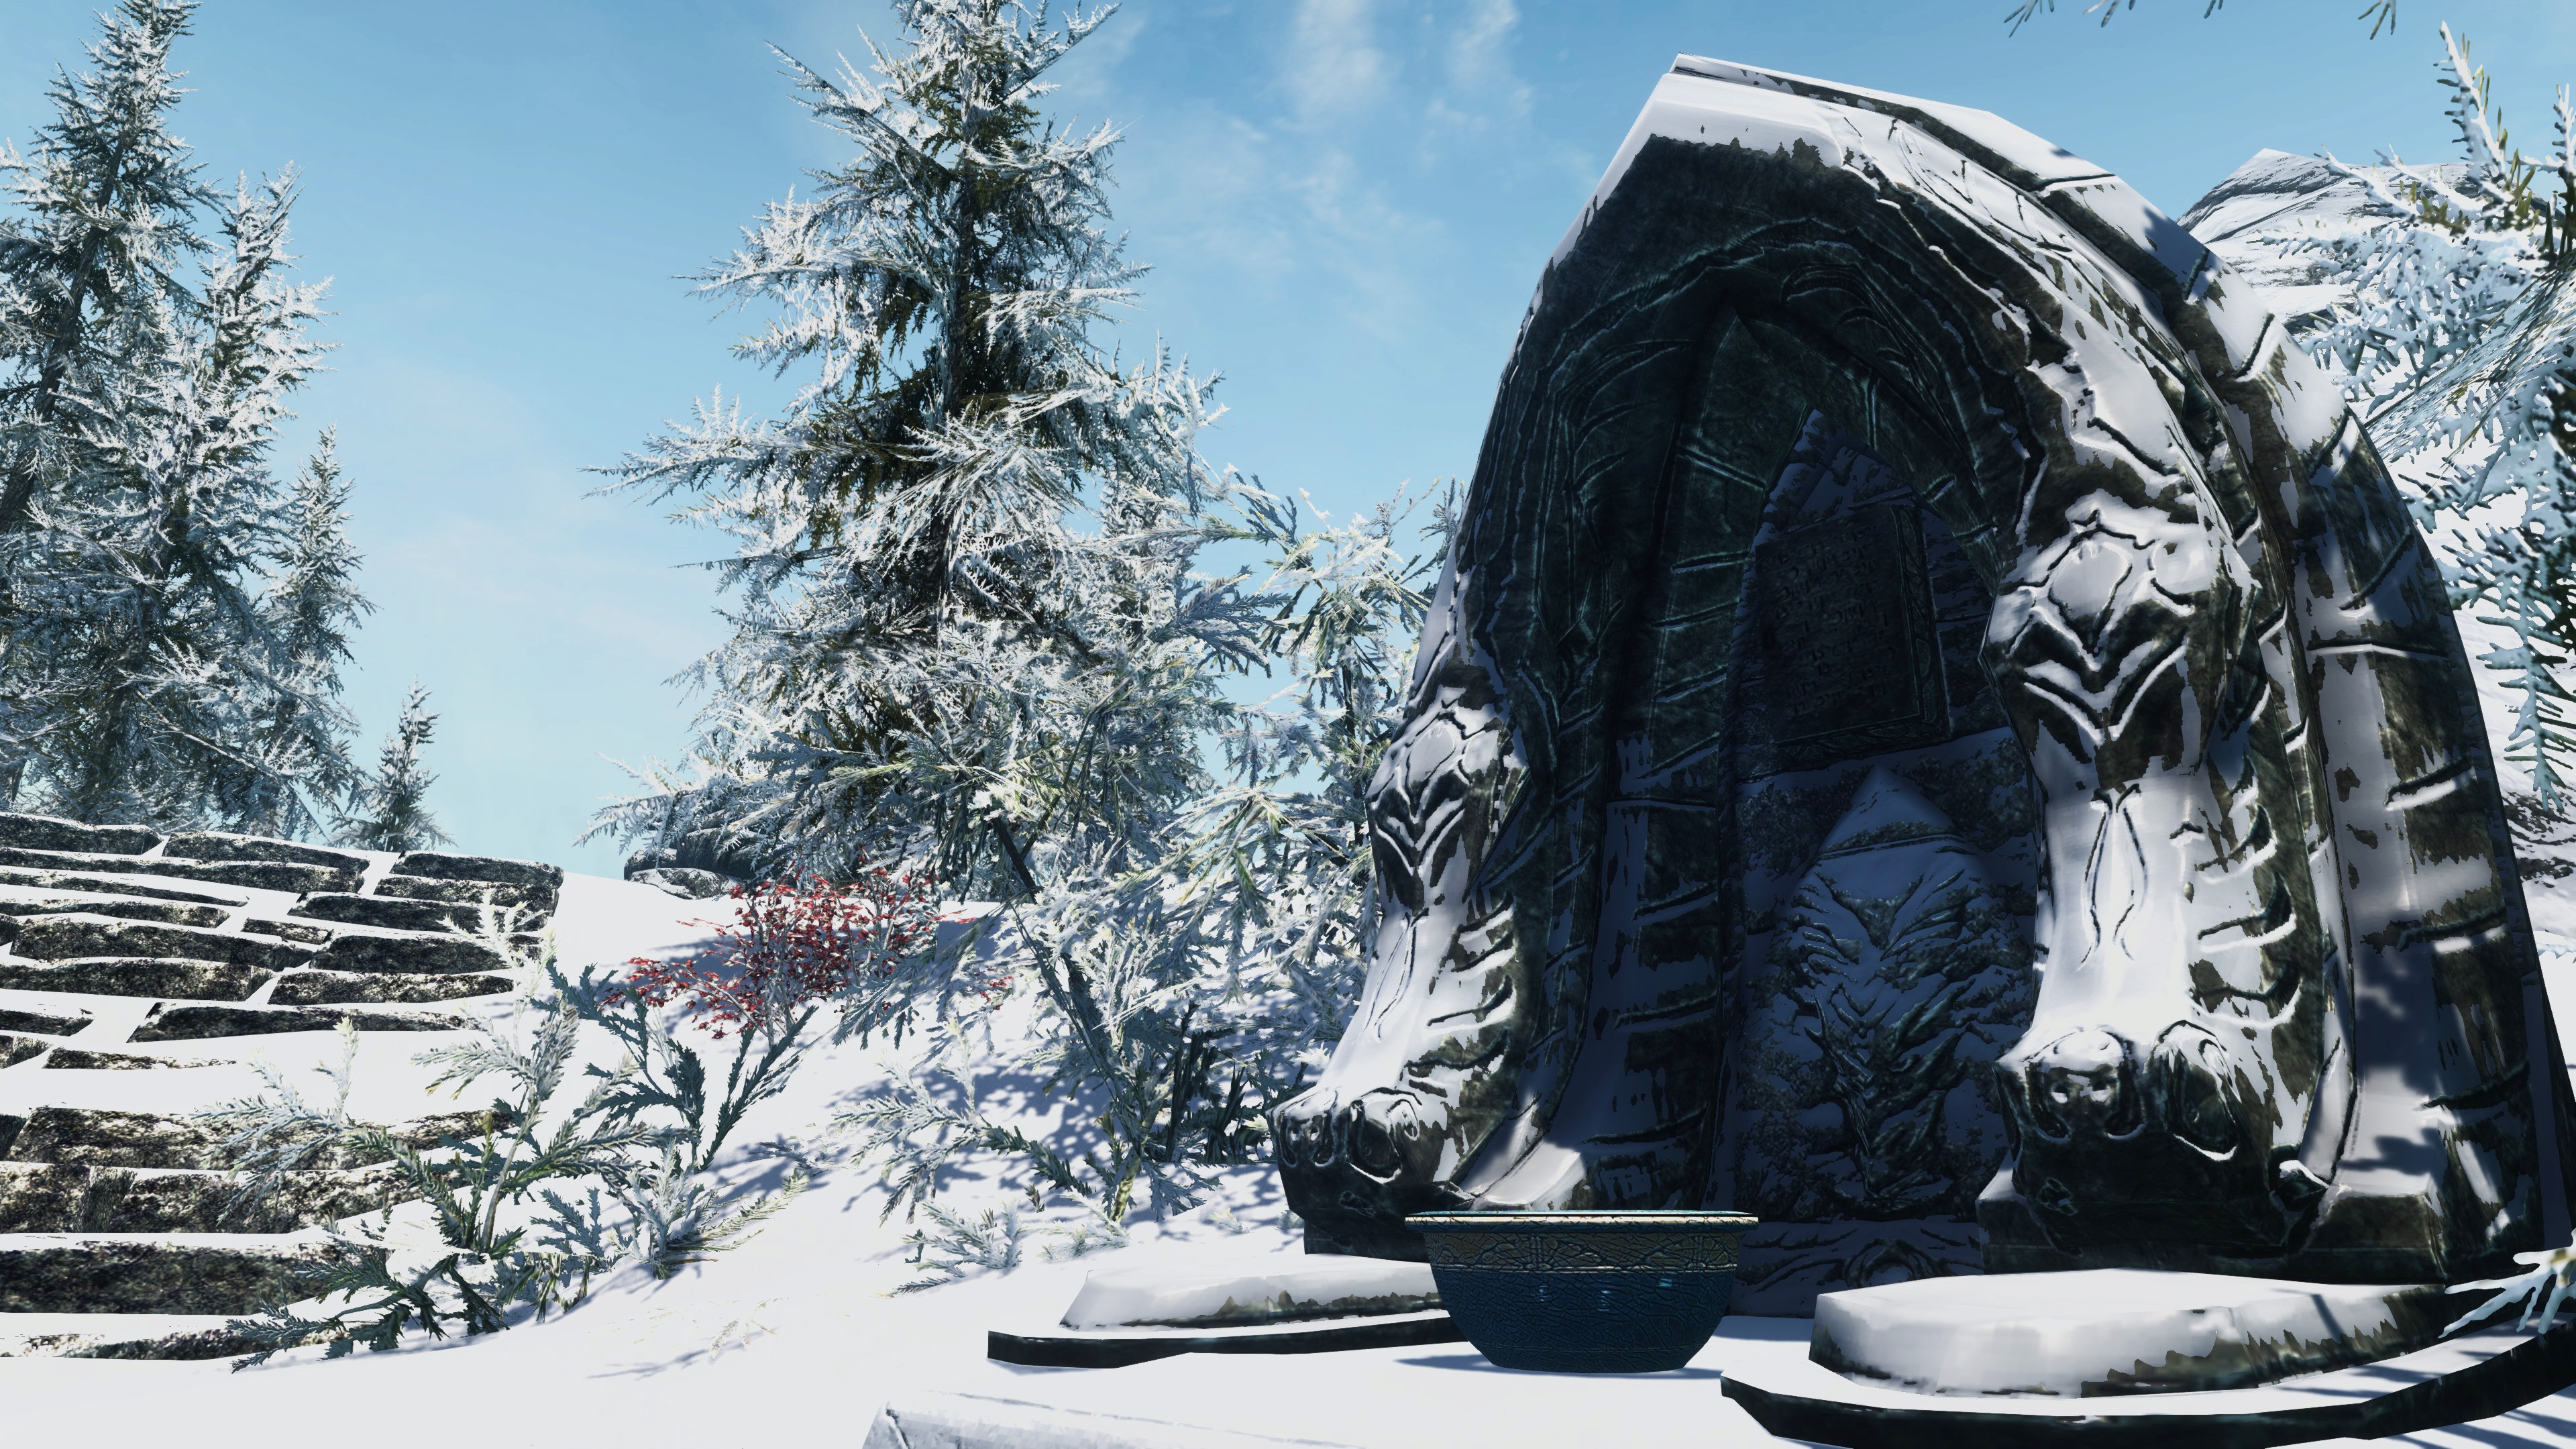 The Elder Scrolls V: Skyrim, Snow, Winter, Video Games Wallpaper